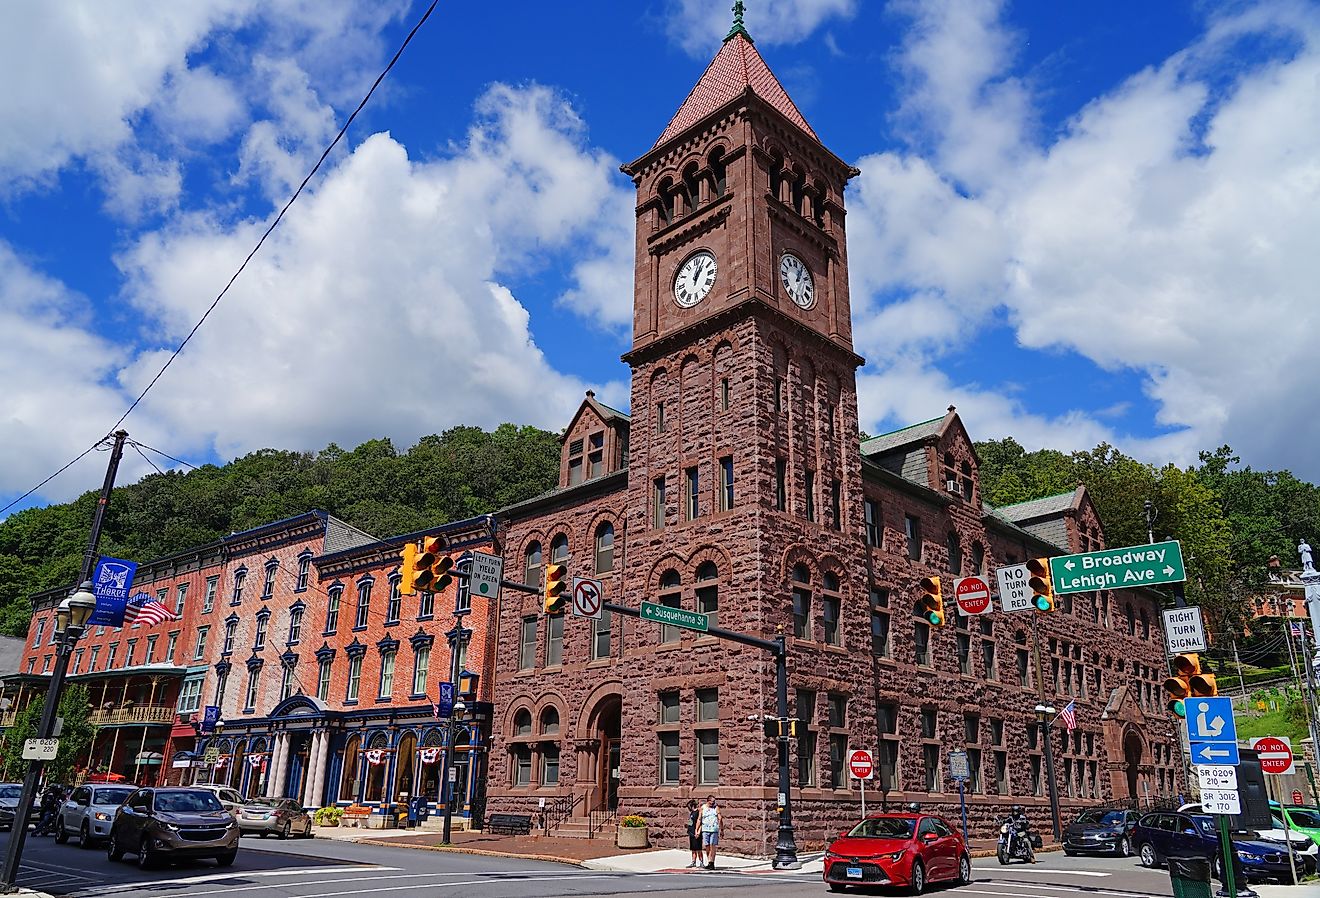 Historic downtown building in Jim Thorpe, Pennsylvania. Image credit EQRoy via Shutterstock 